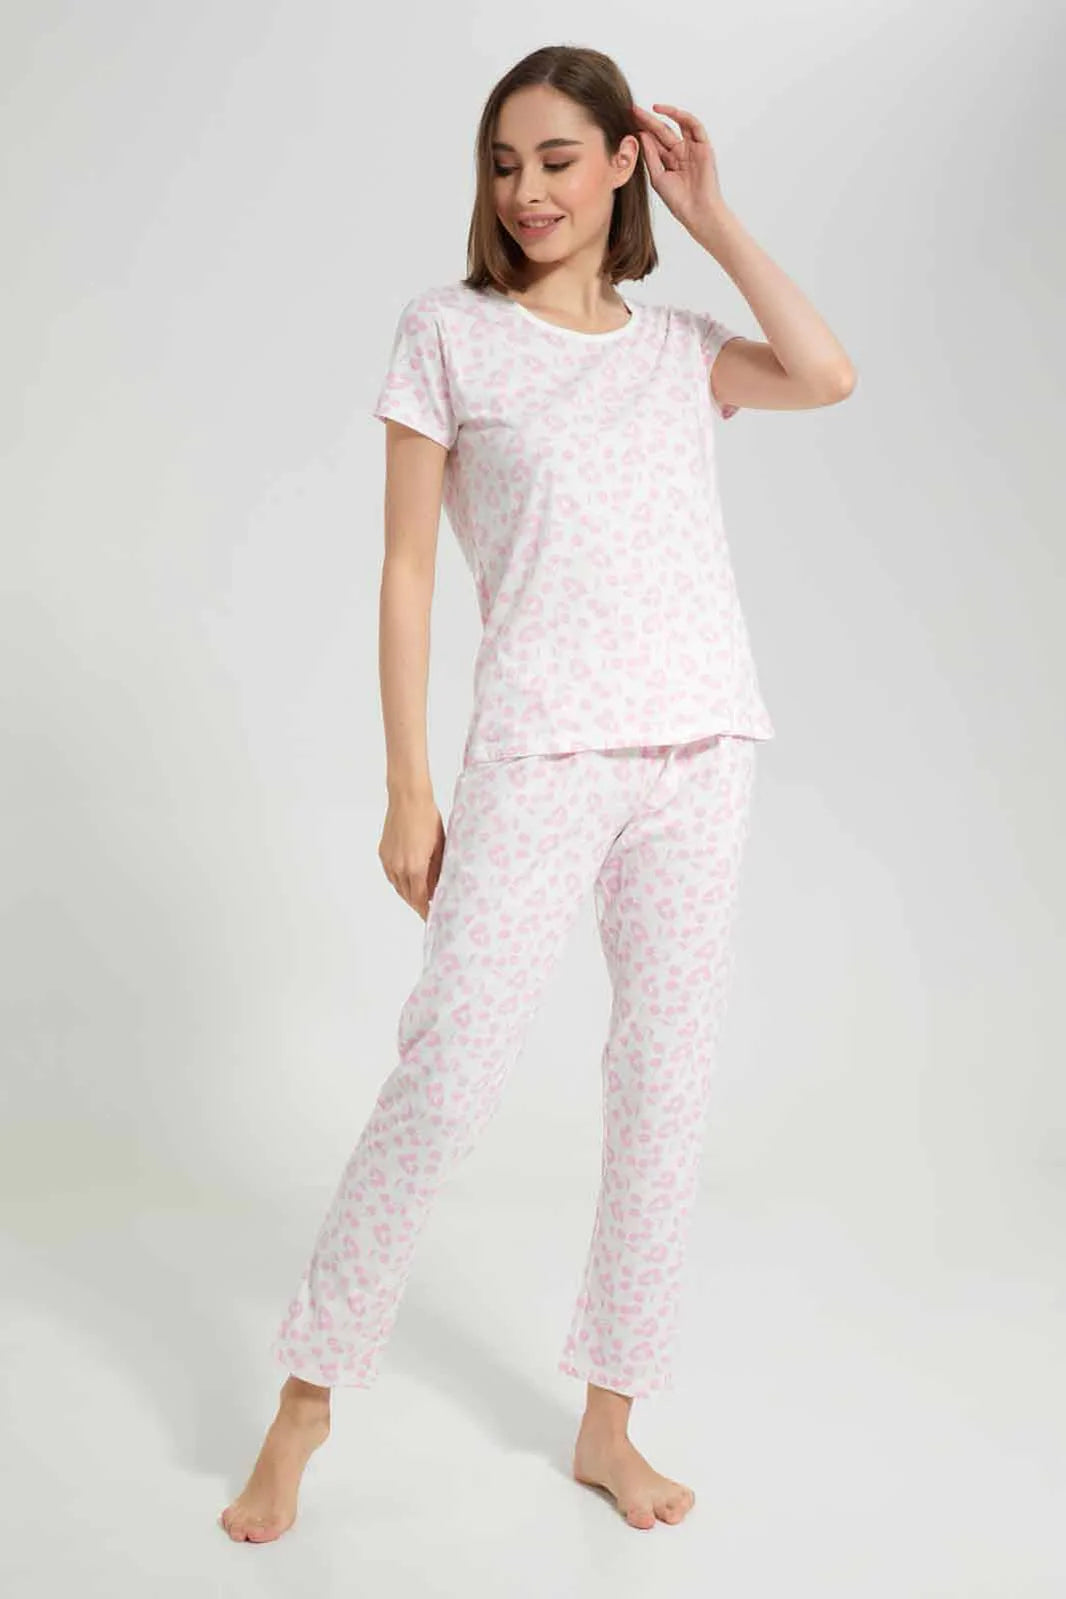 Latuza Women's V-neck Sleepwear Short Sleeve Pajama Set, Light Gray, Medium  price in Saudi Arabia,  Saudi Arabia